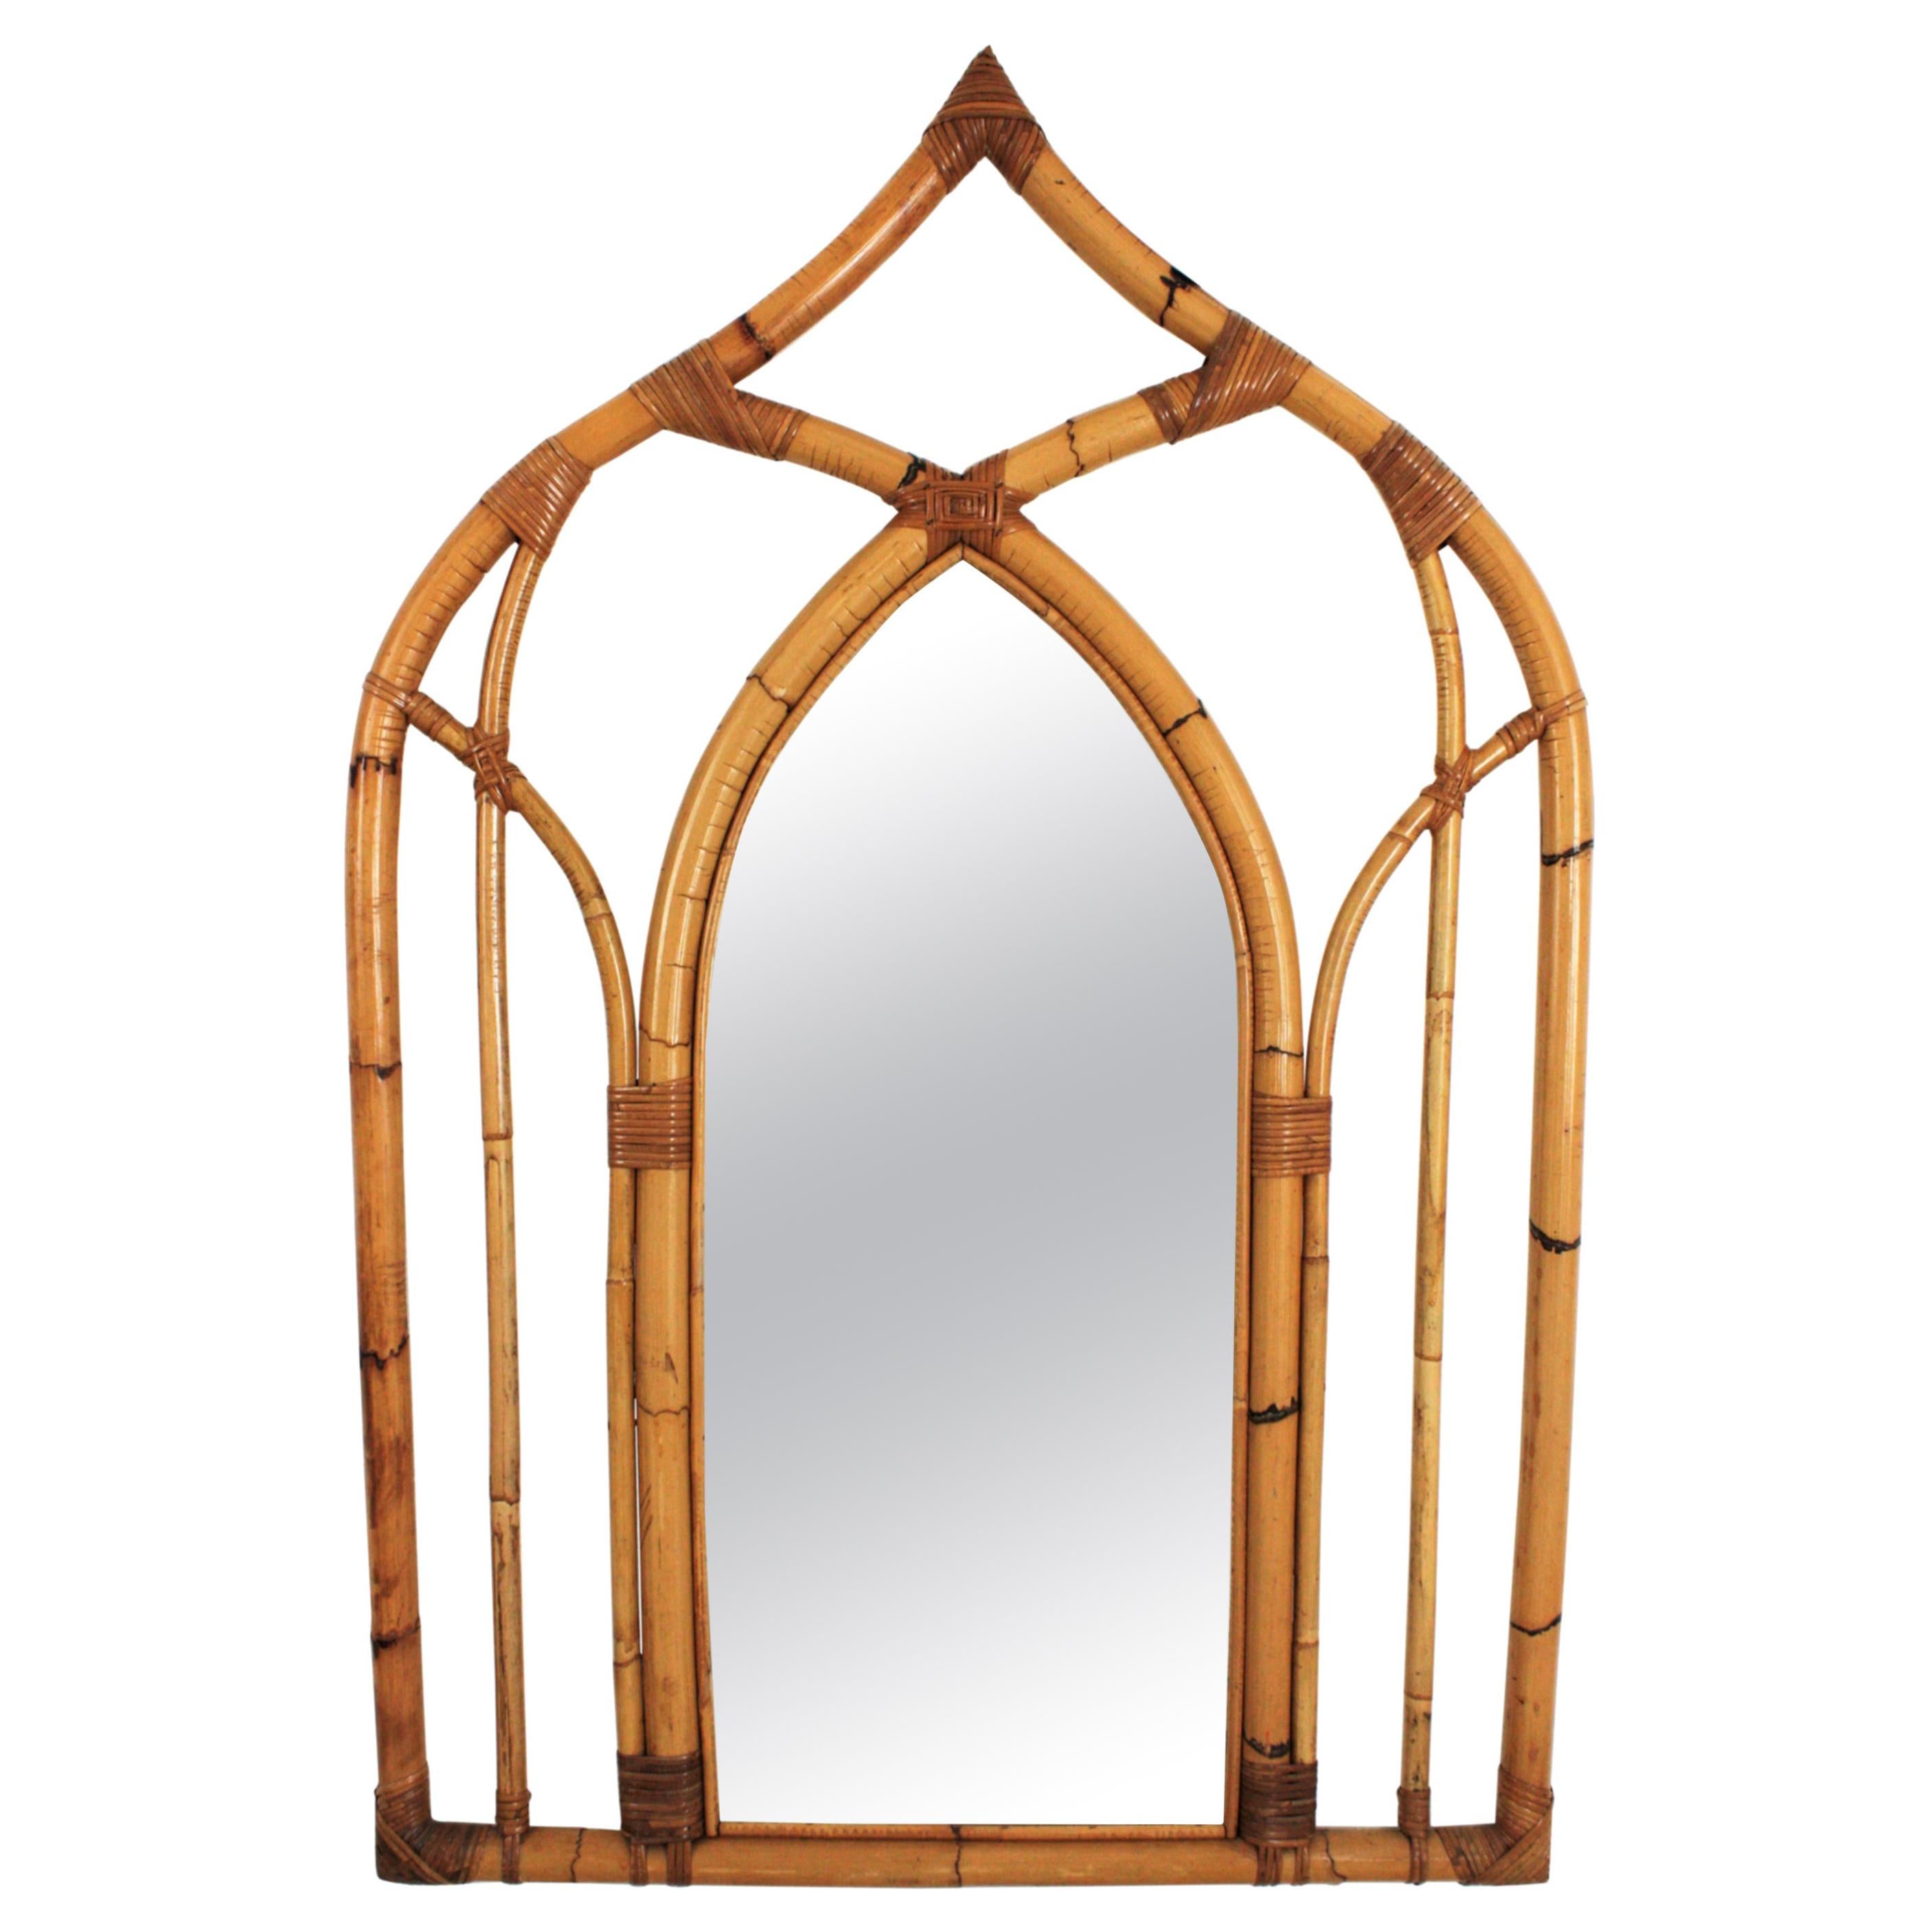 Bamboo Rattan Italian Modernist Arabic Inspired Wall Mirror For Sale